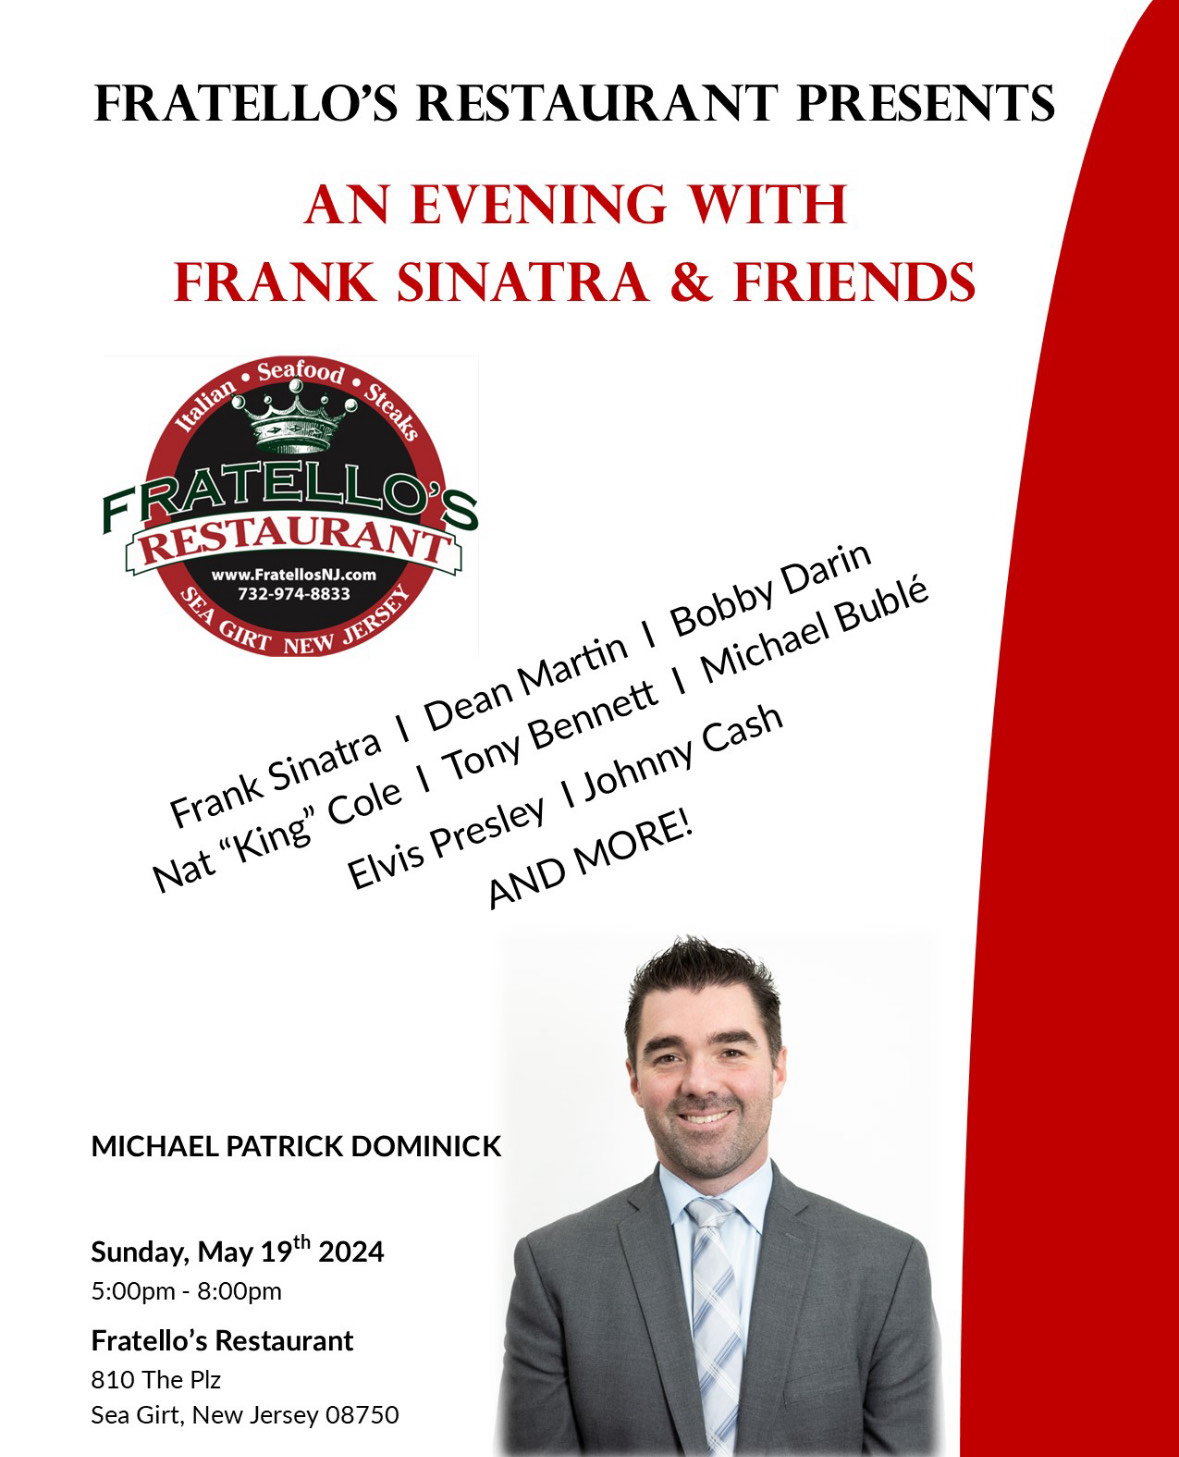 FRATELLO'S RESTAURANT PRESENTS AN EVENING WITH FRANK SINATRA & FRIENDS. Frank Sinatra, Dean Martin, Bobby Darin, Nat 